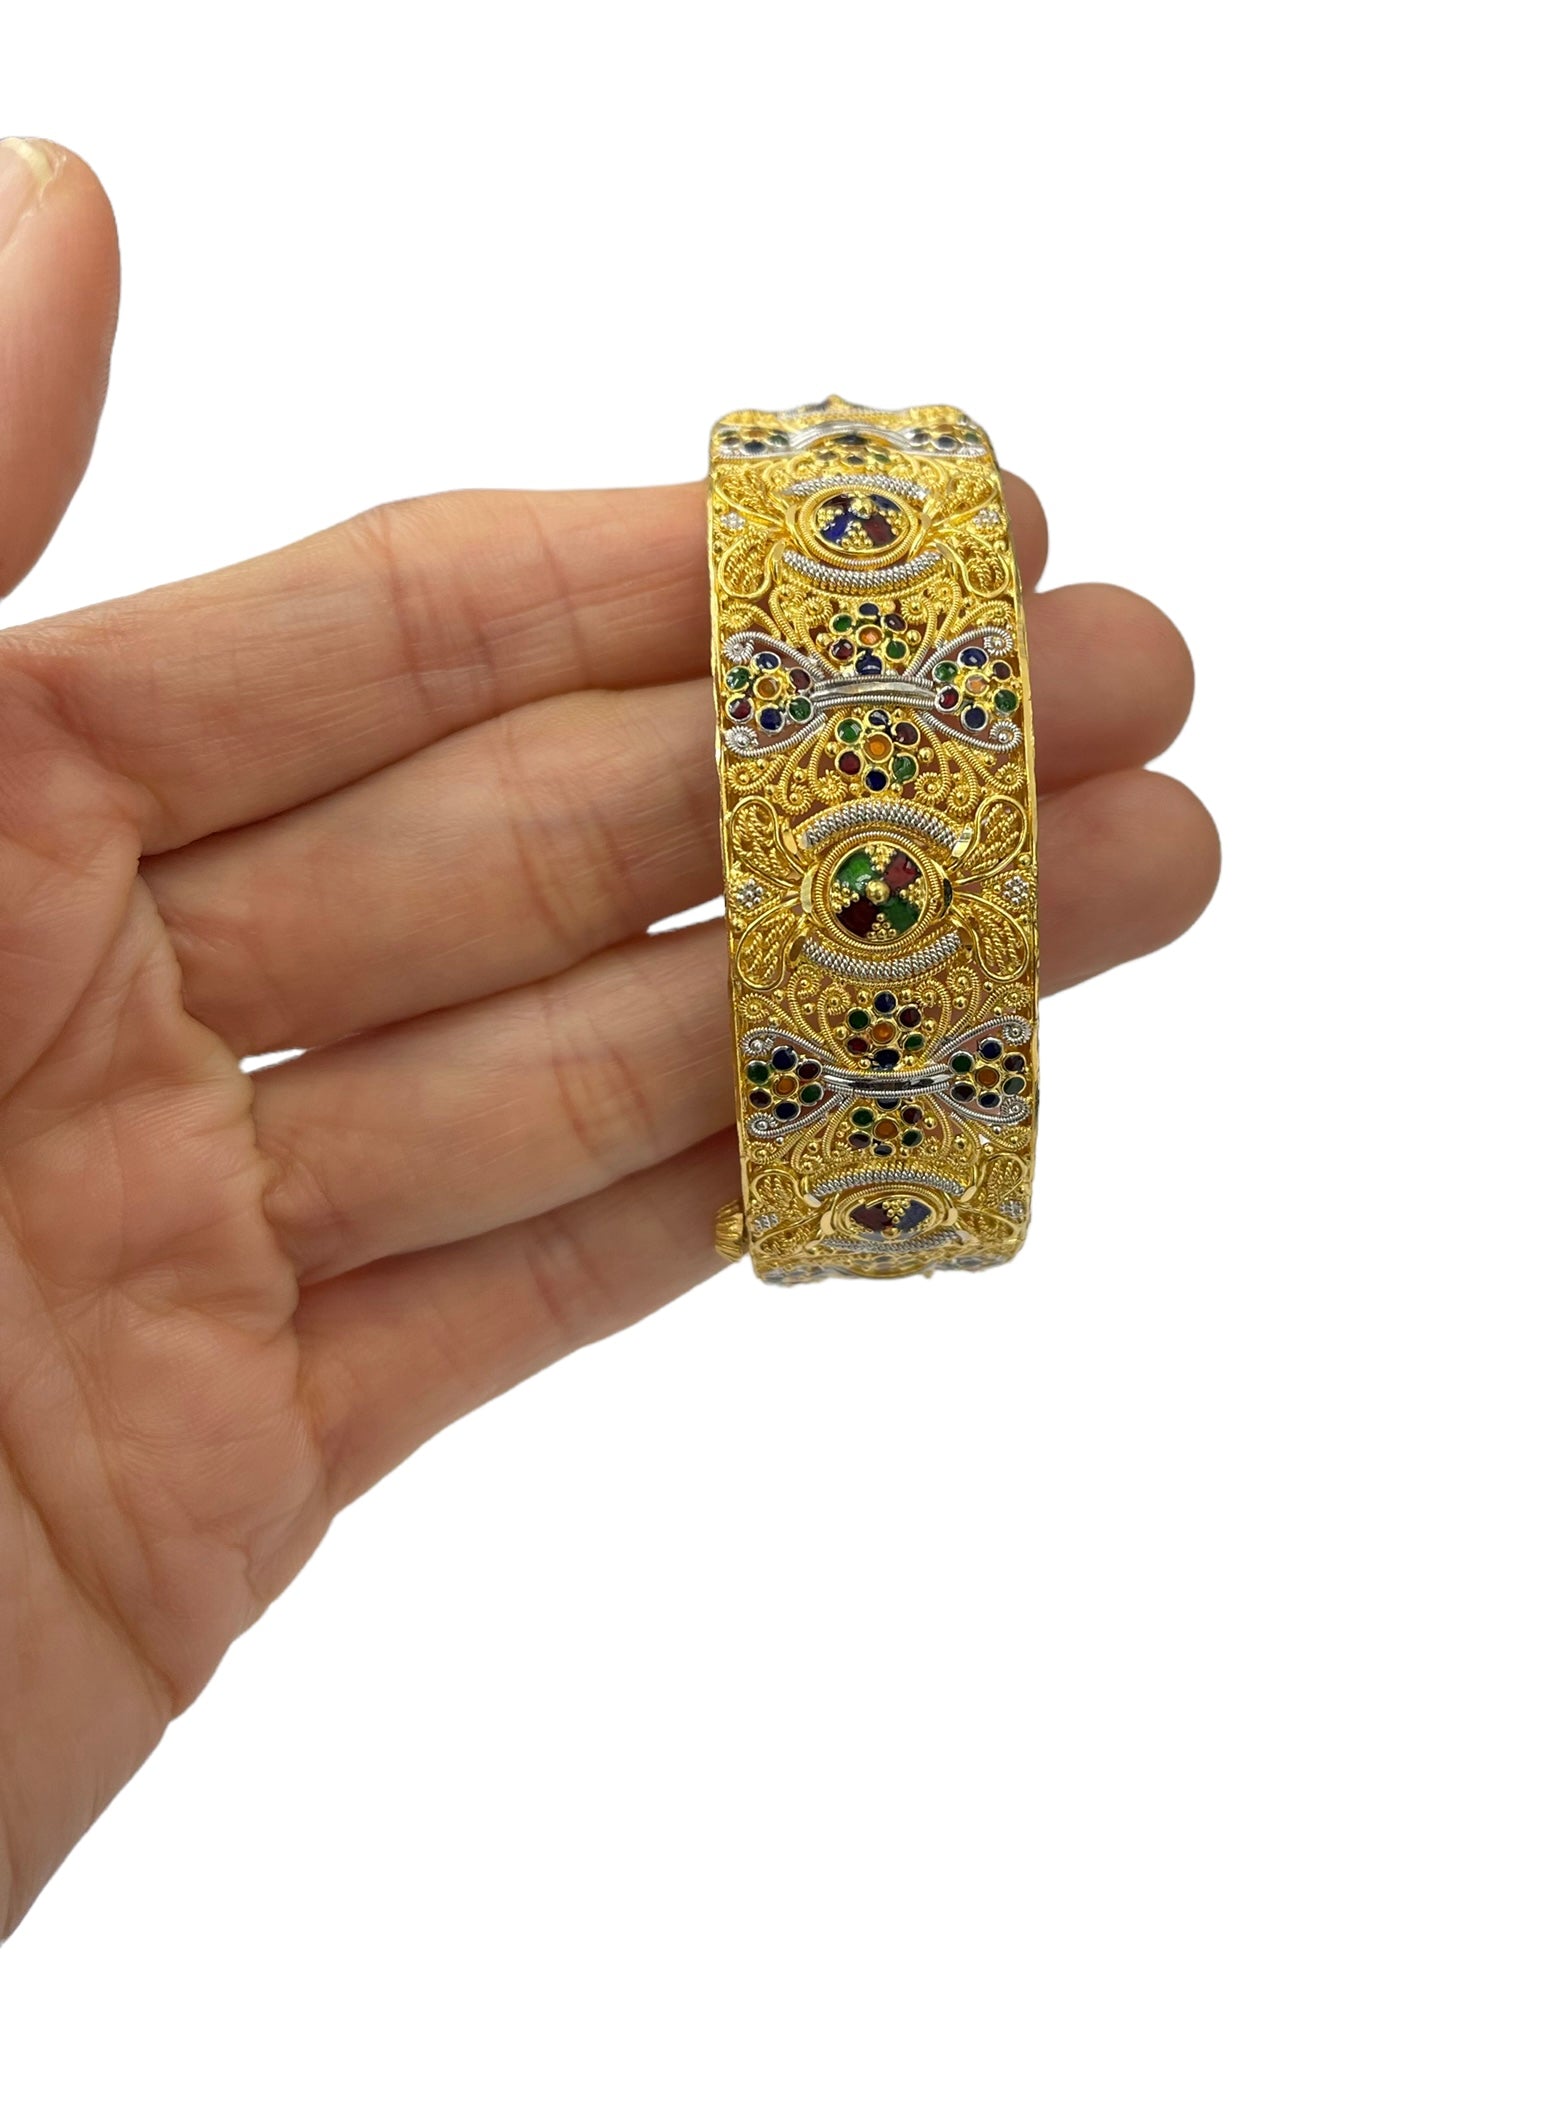 22kt Yellow Gold Indian Bracelet Bangle 19.5mm Wide